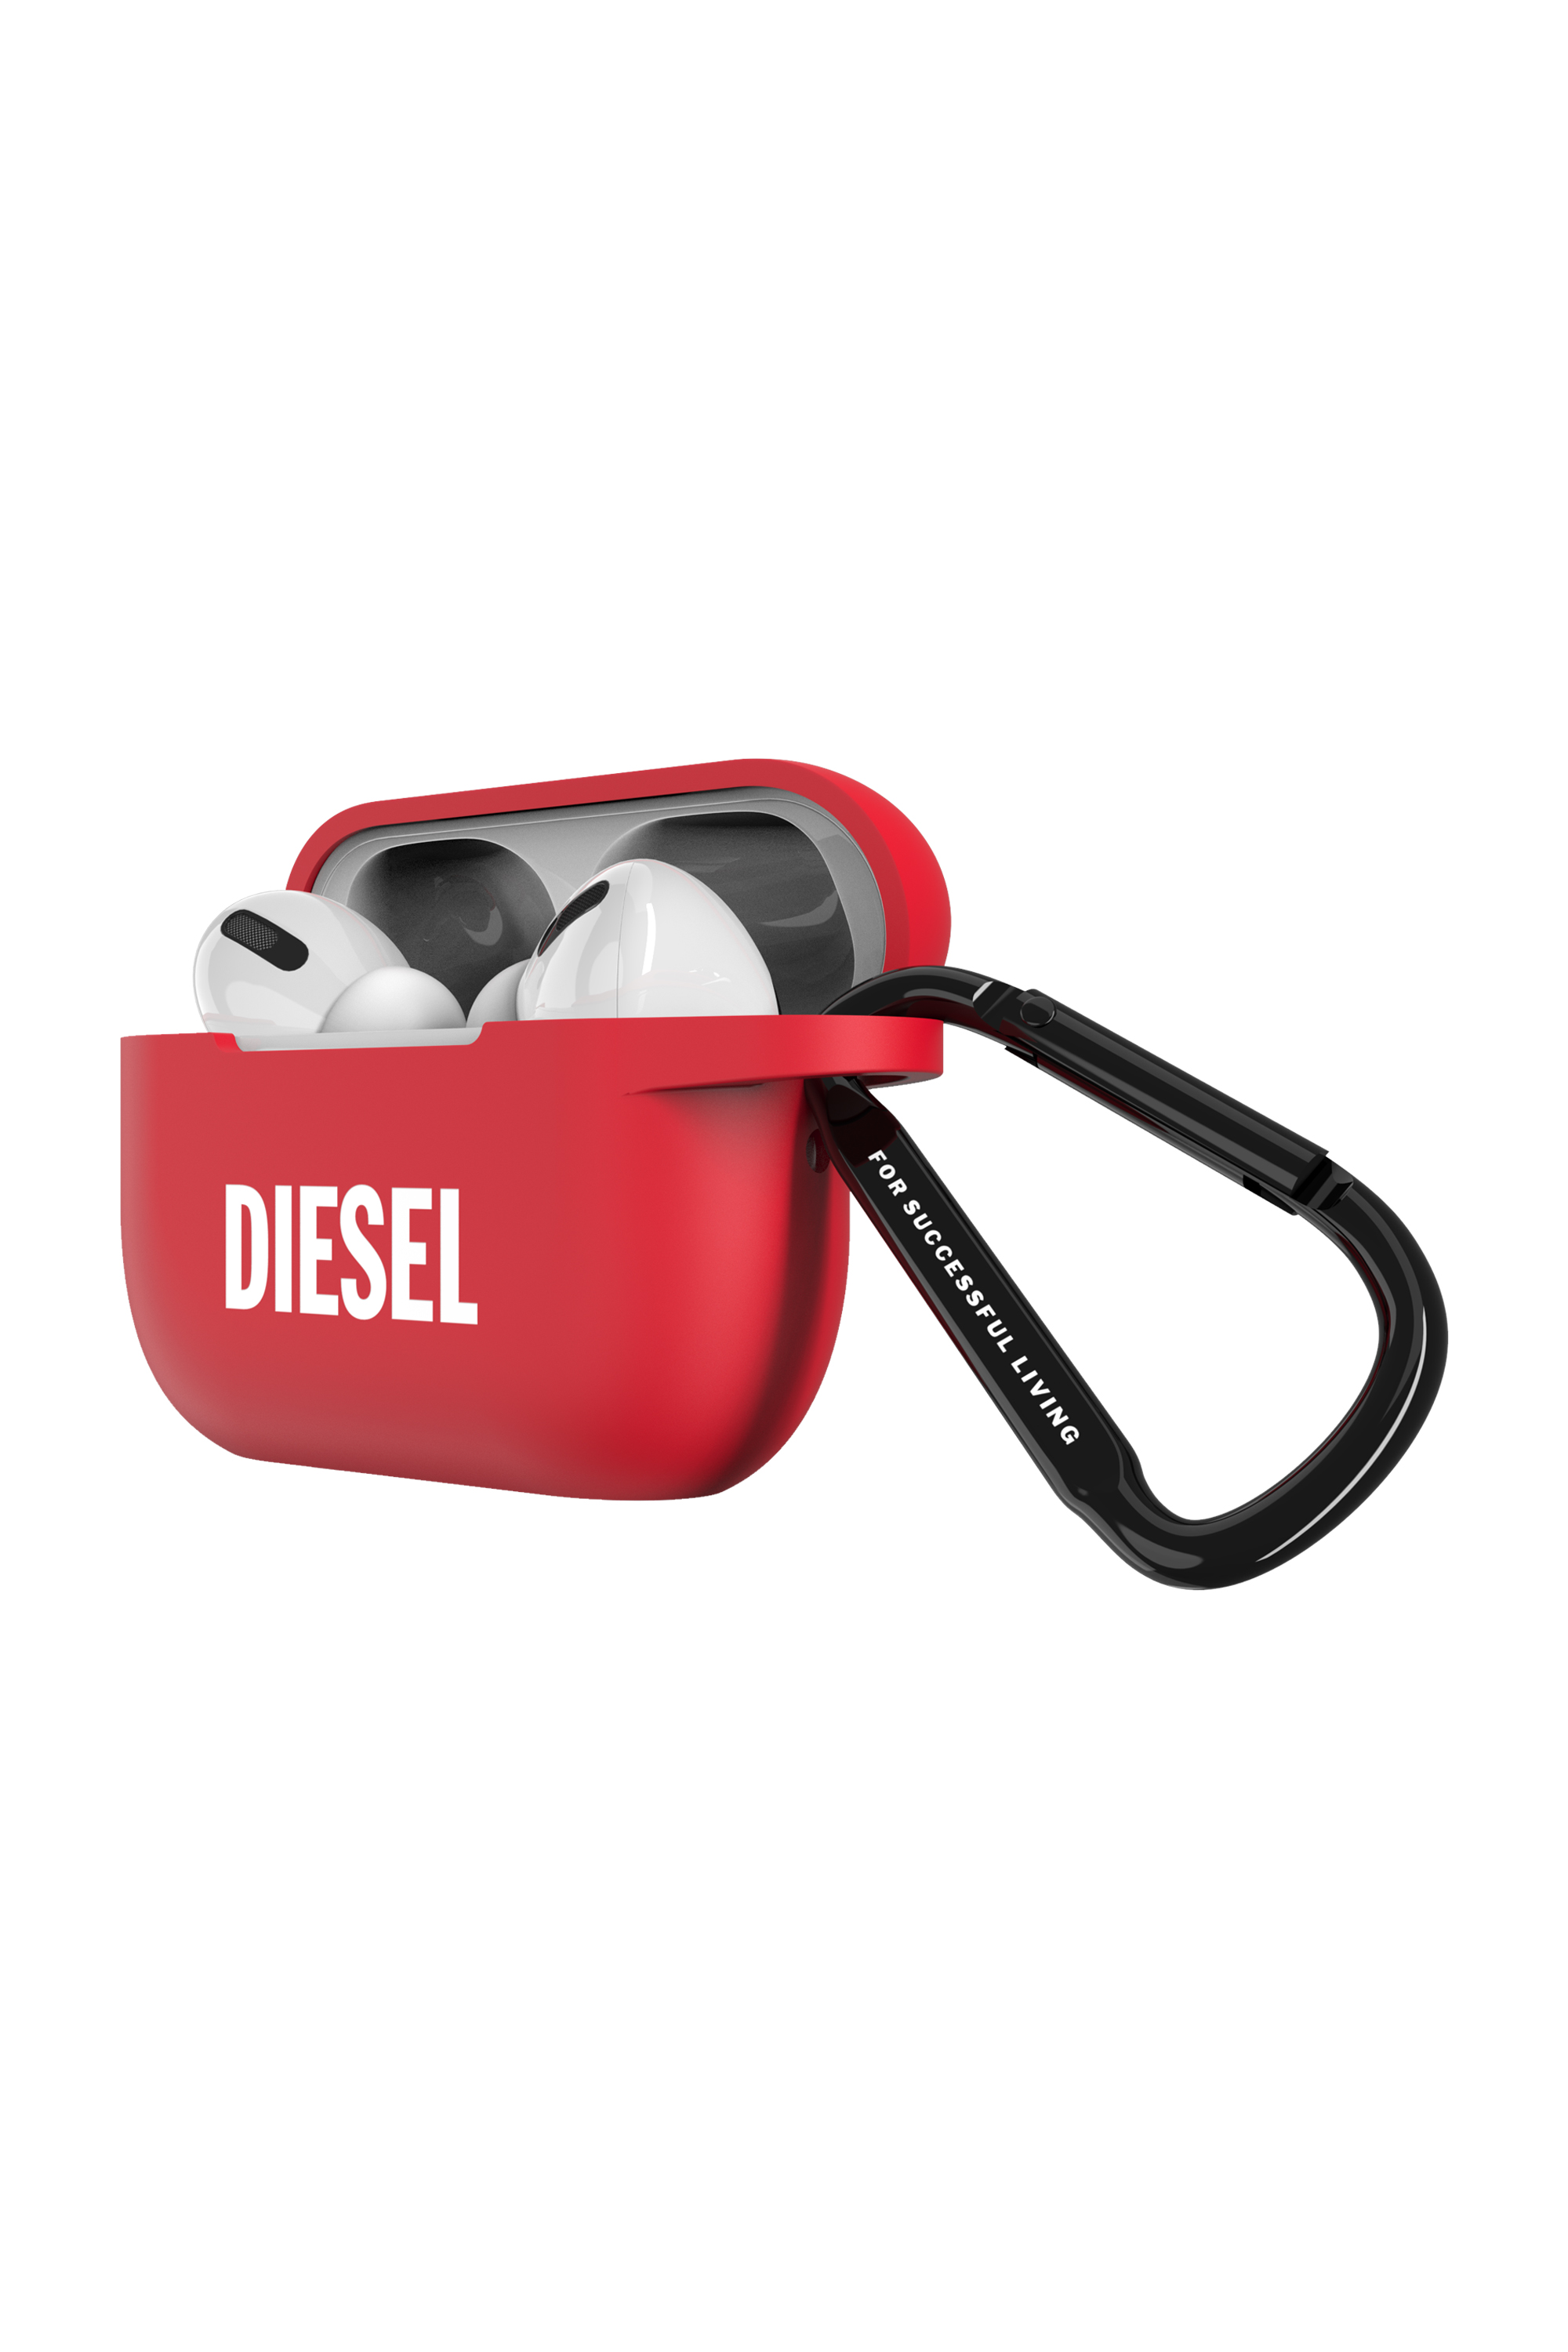 Diesel - 52956 AIRPOD CASE, Rojo - Image 3